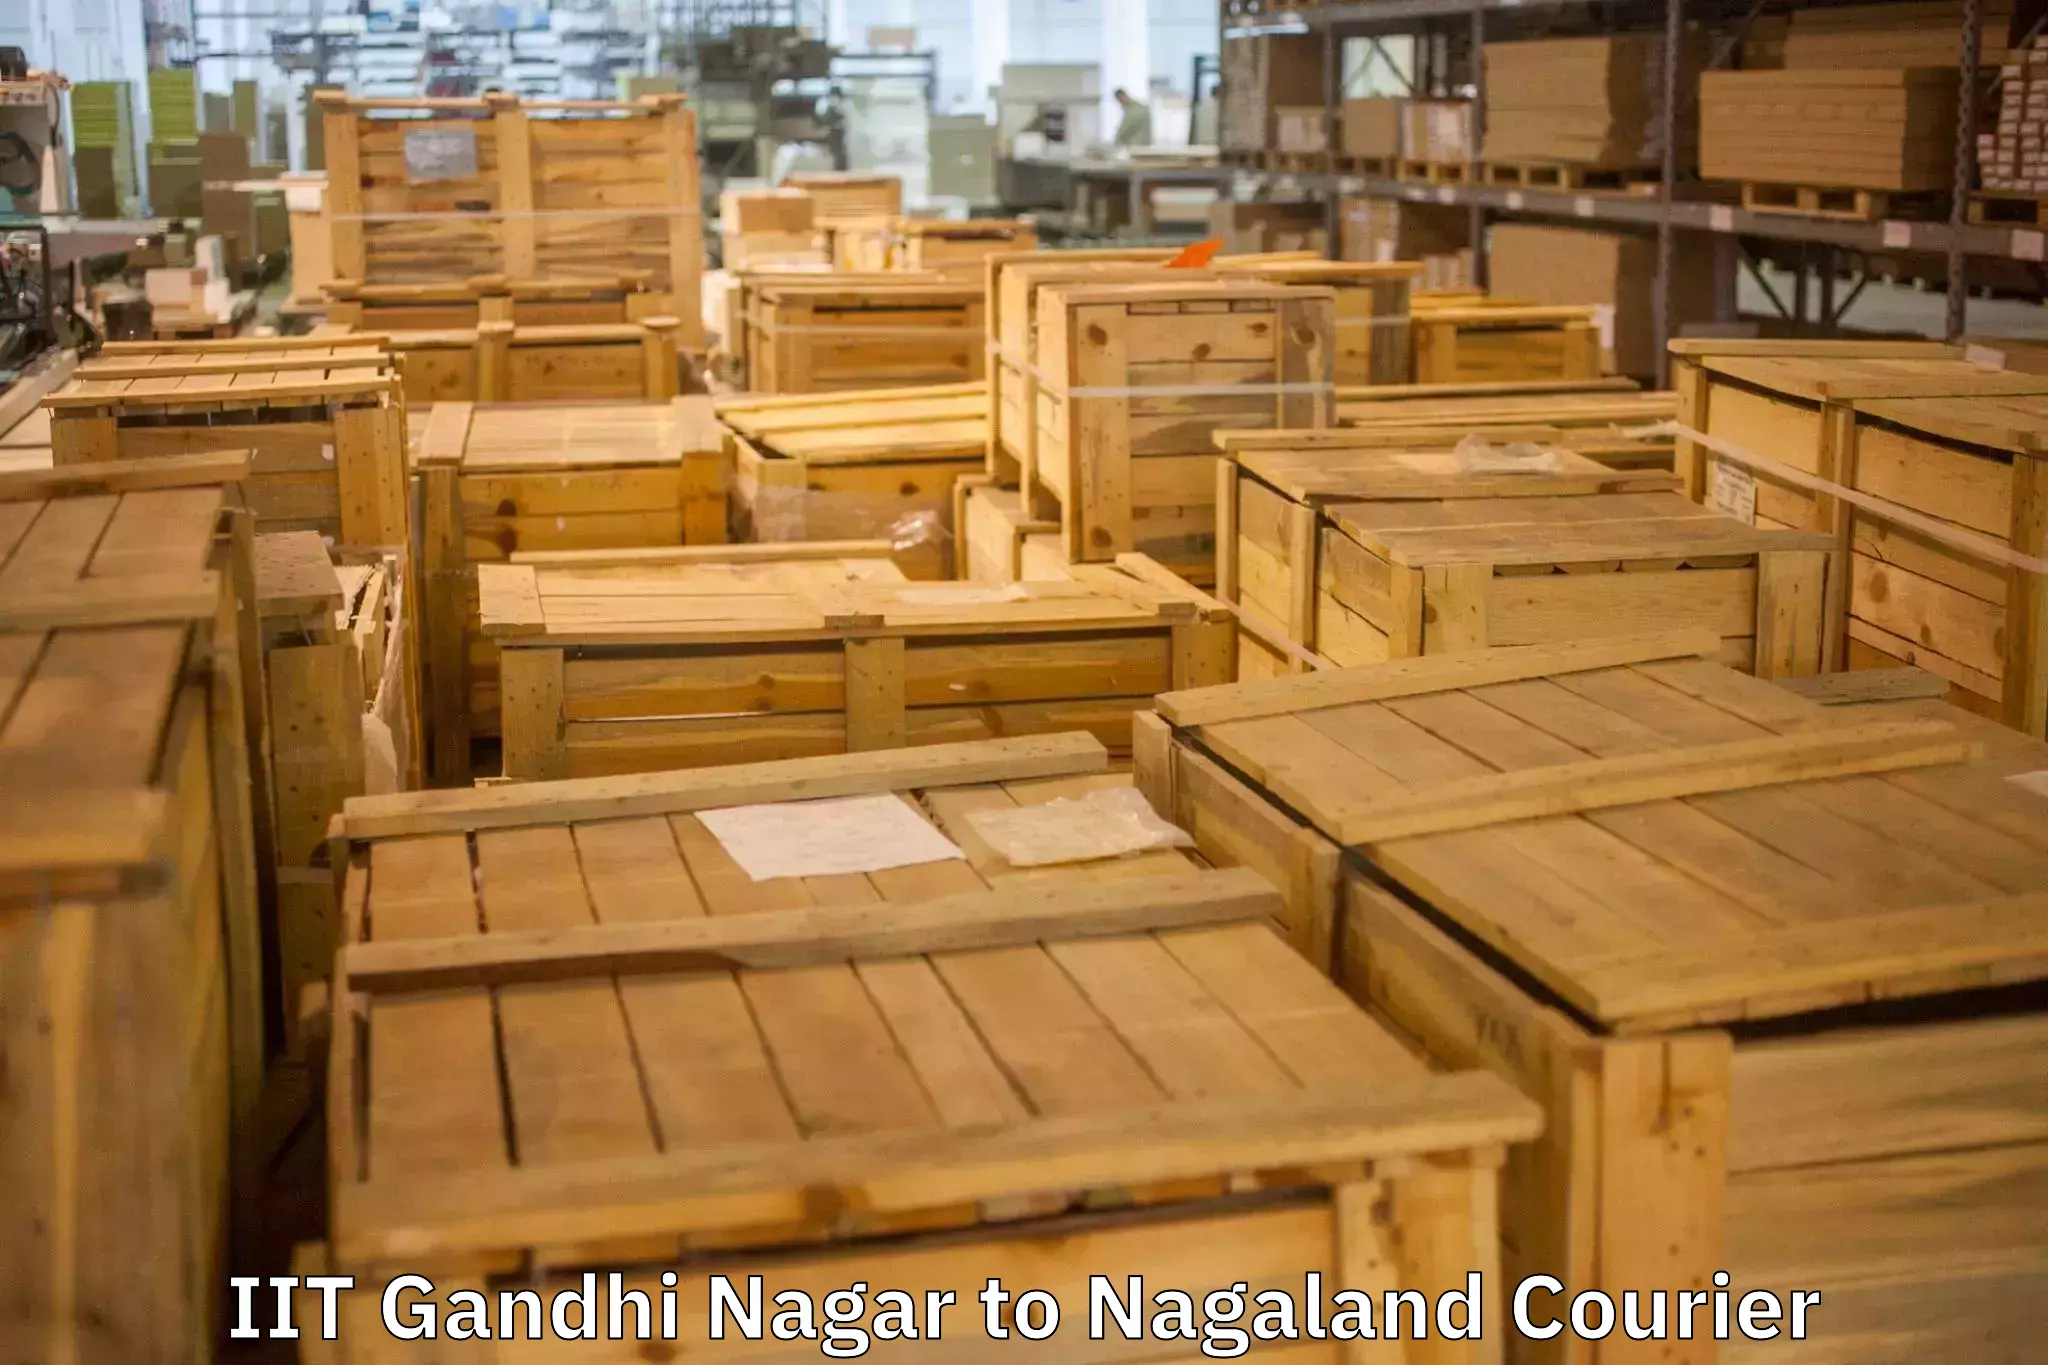 Efficient moving company IIT Gandhi Nagar to Mon